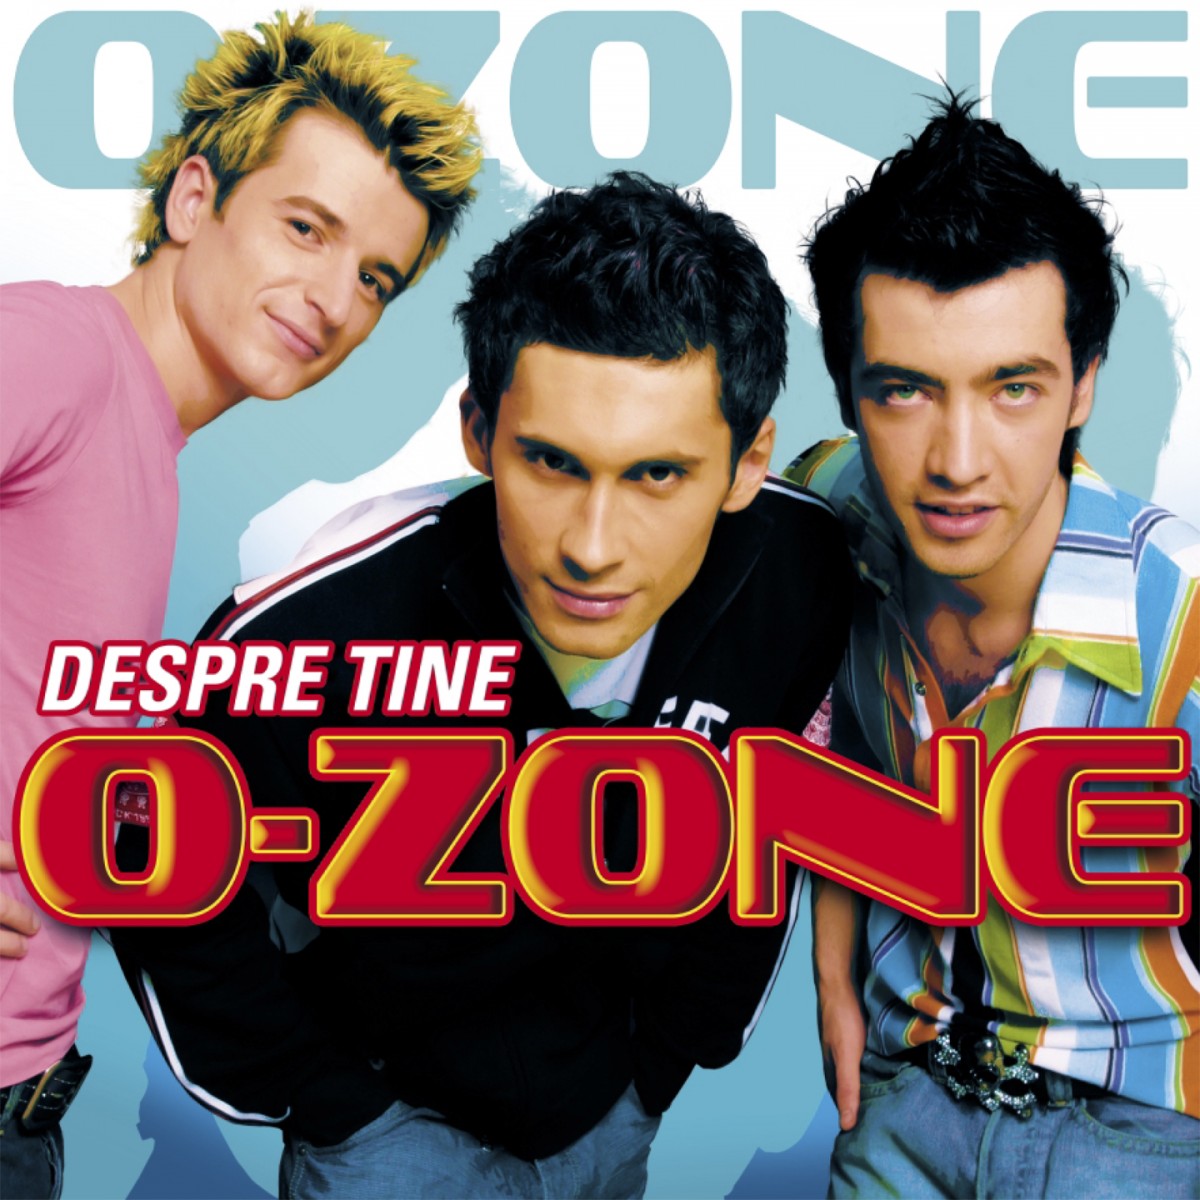 Ozone ai. Ozone обложка альбома o-Zone. Участники группы o Zone. O-Zone 2000 2004. Румынская группа Озон.